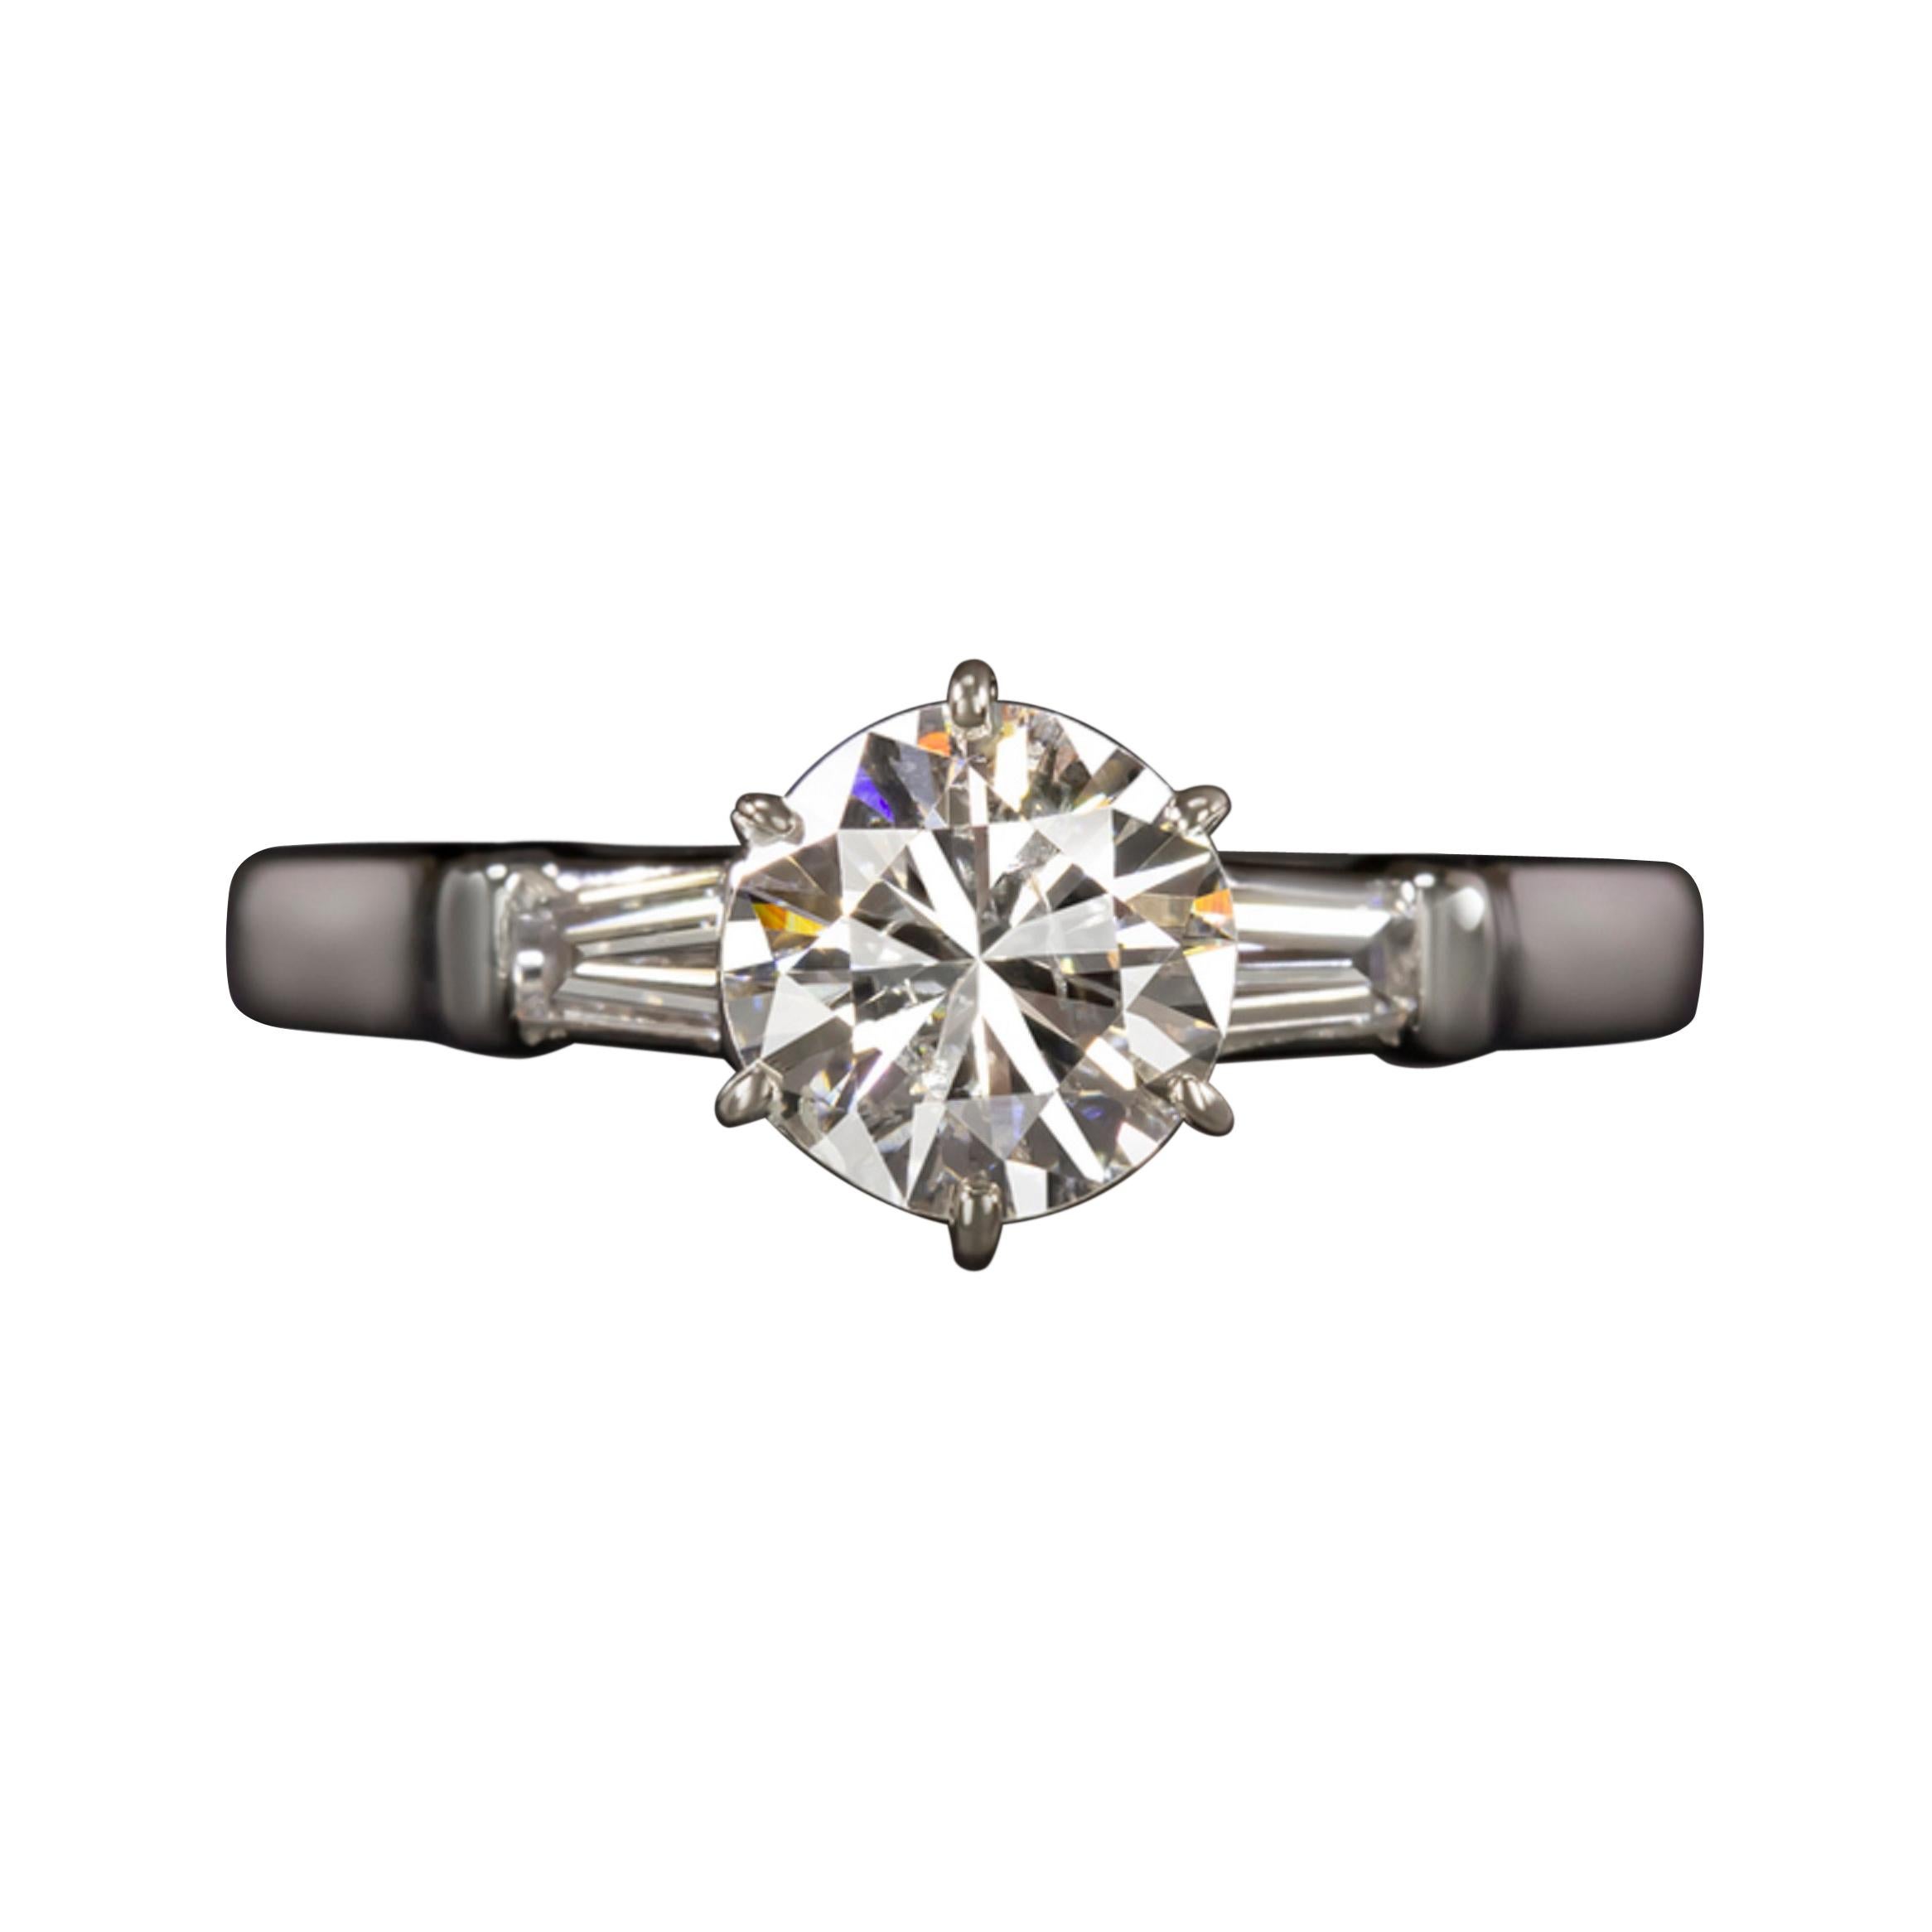 1.19 Carat Round Cut Diamond Engagement Ring